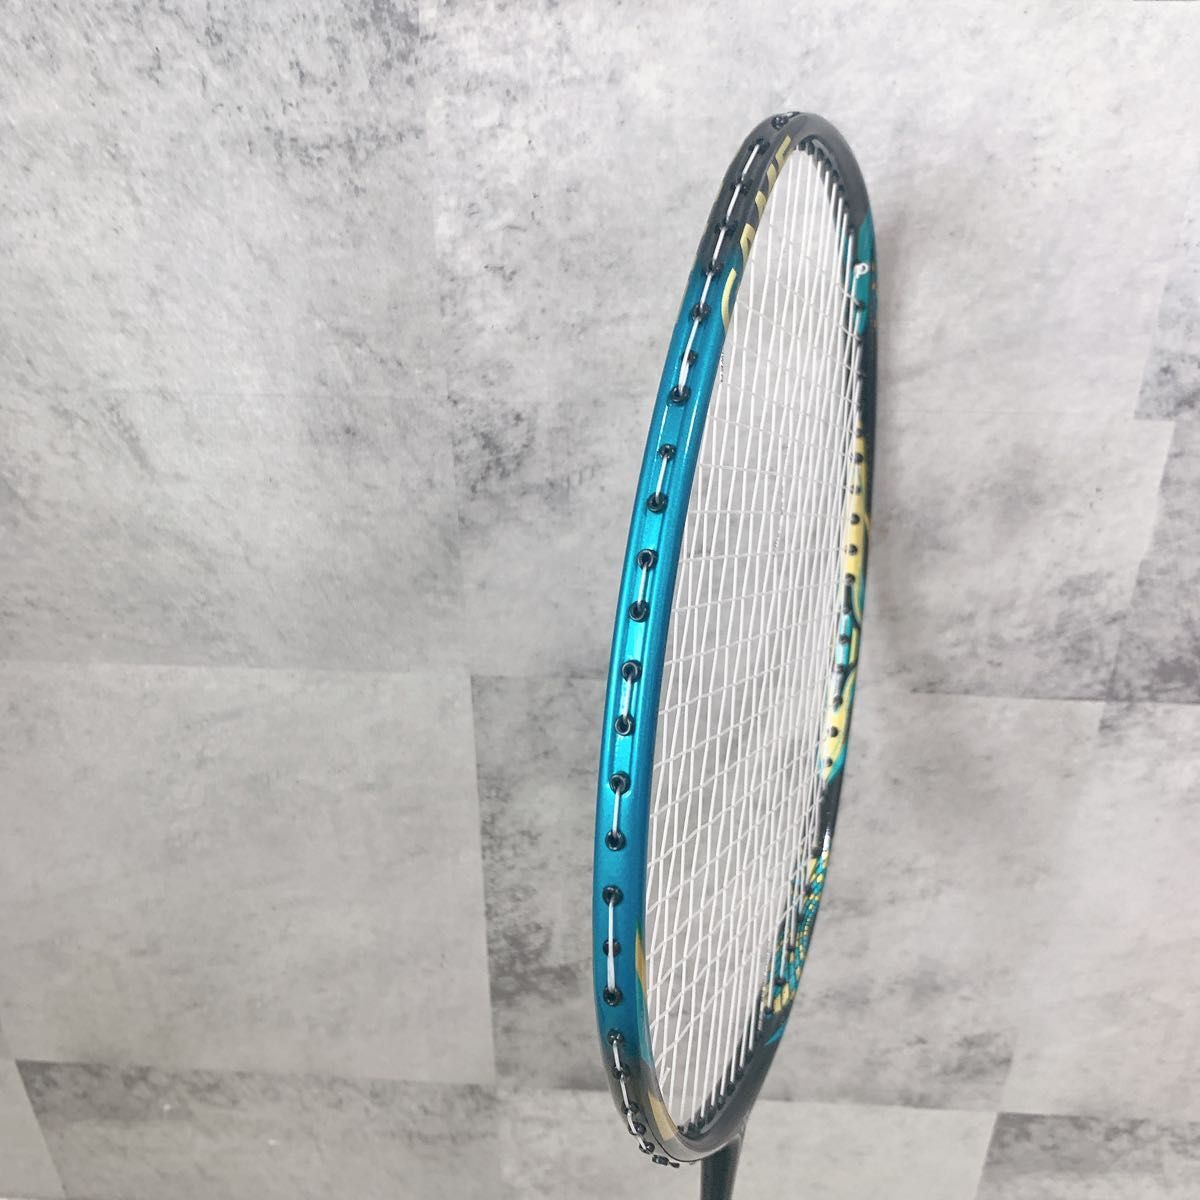  Yonex badminton racket Astro ks88S game game YONEX